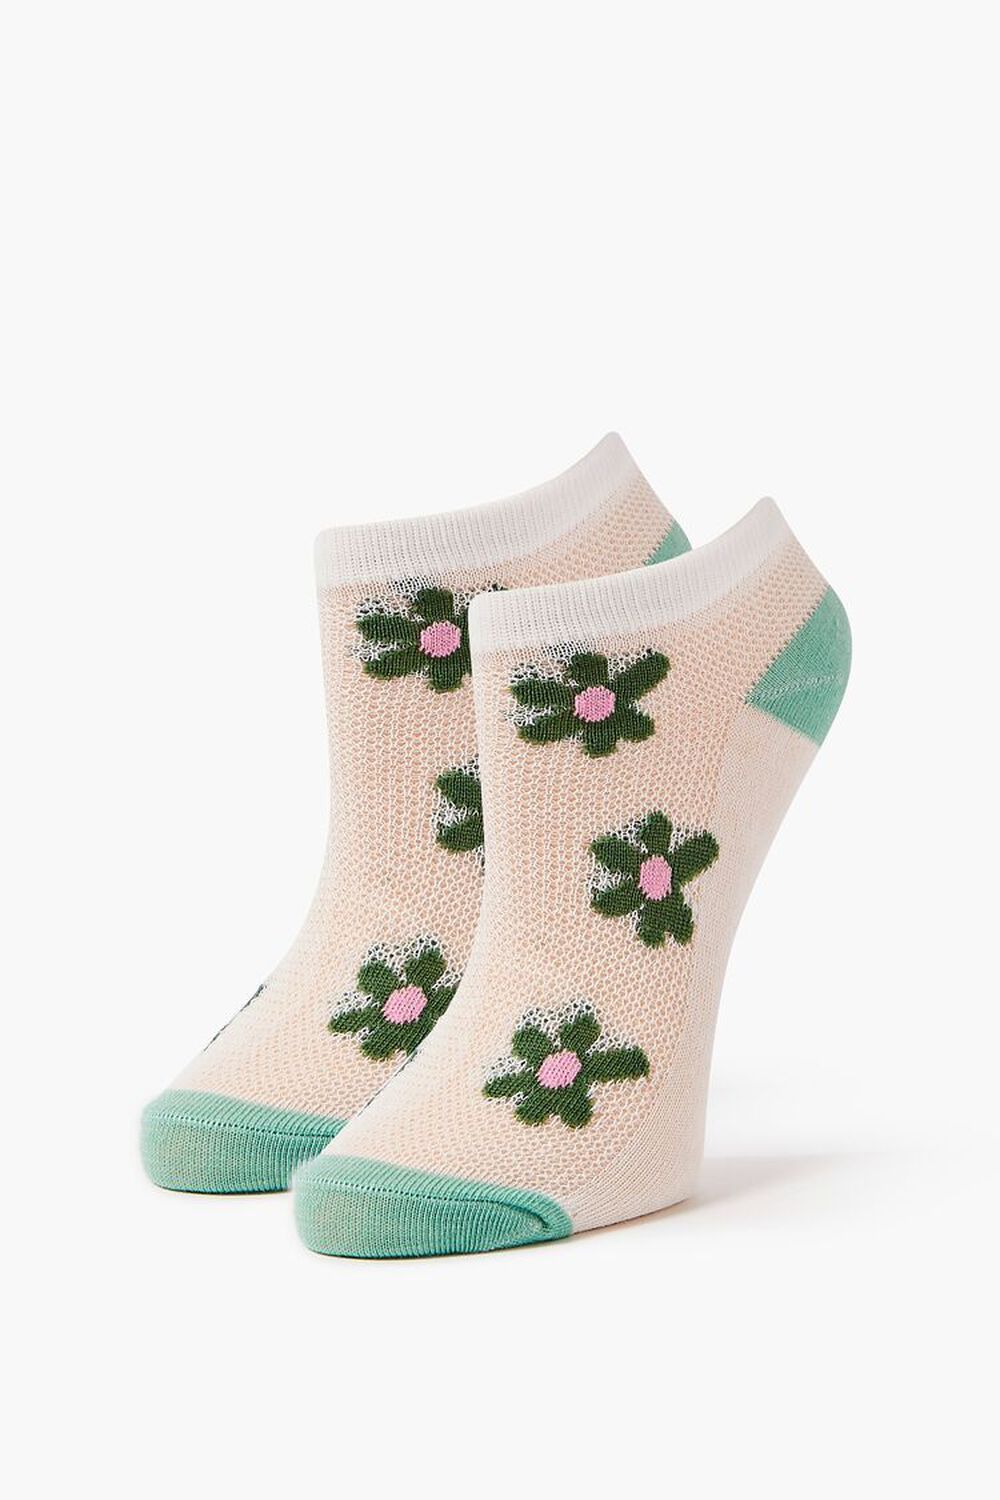 Floral Print Colorblock Ankle Socks, image 1